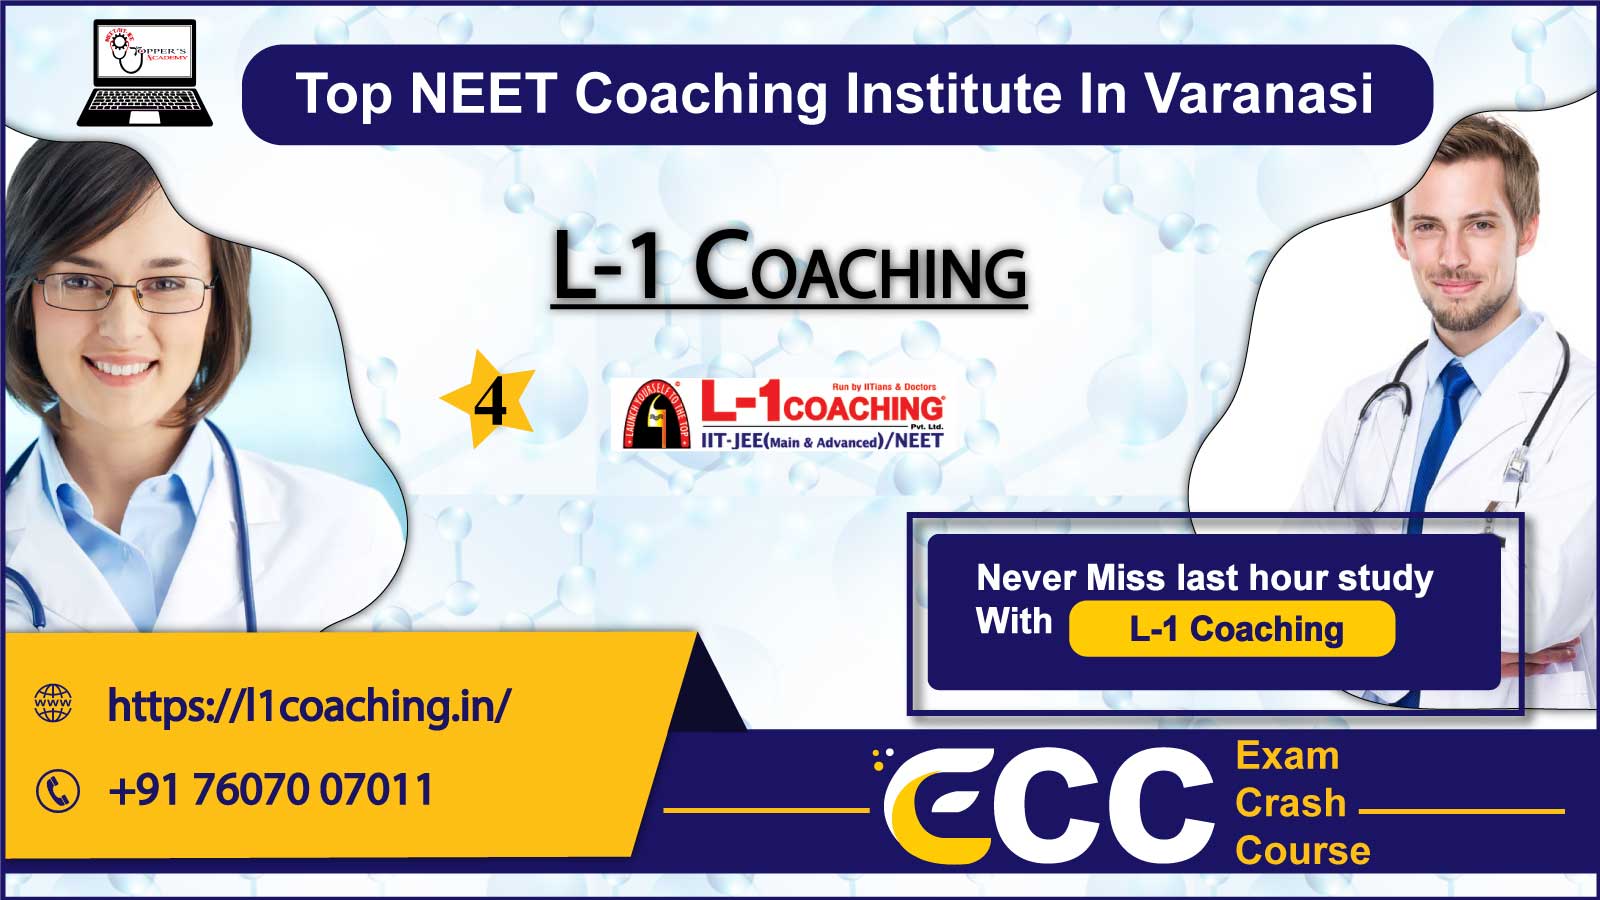 L-1 NEET Coaching in Varanasi